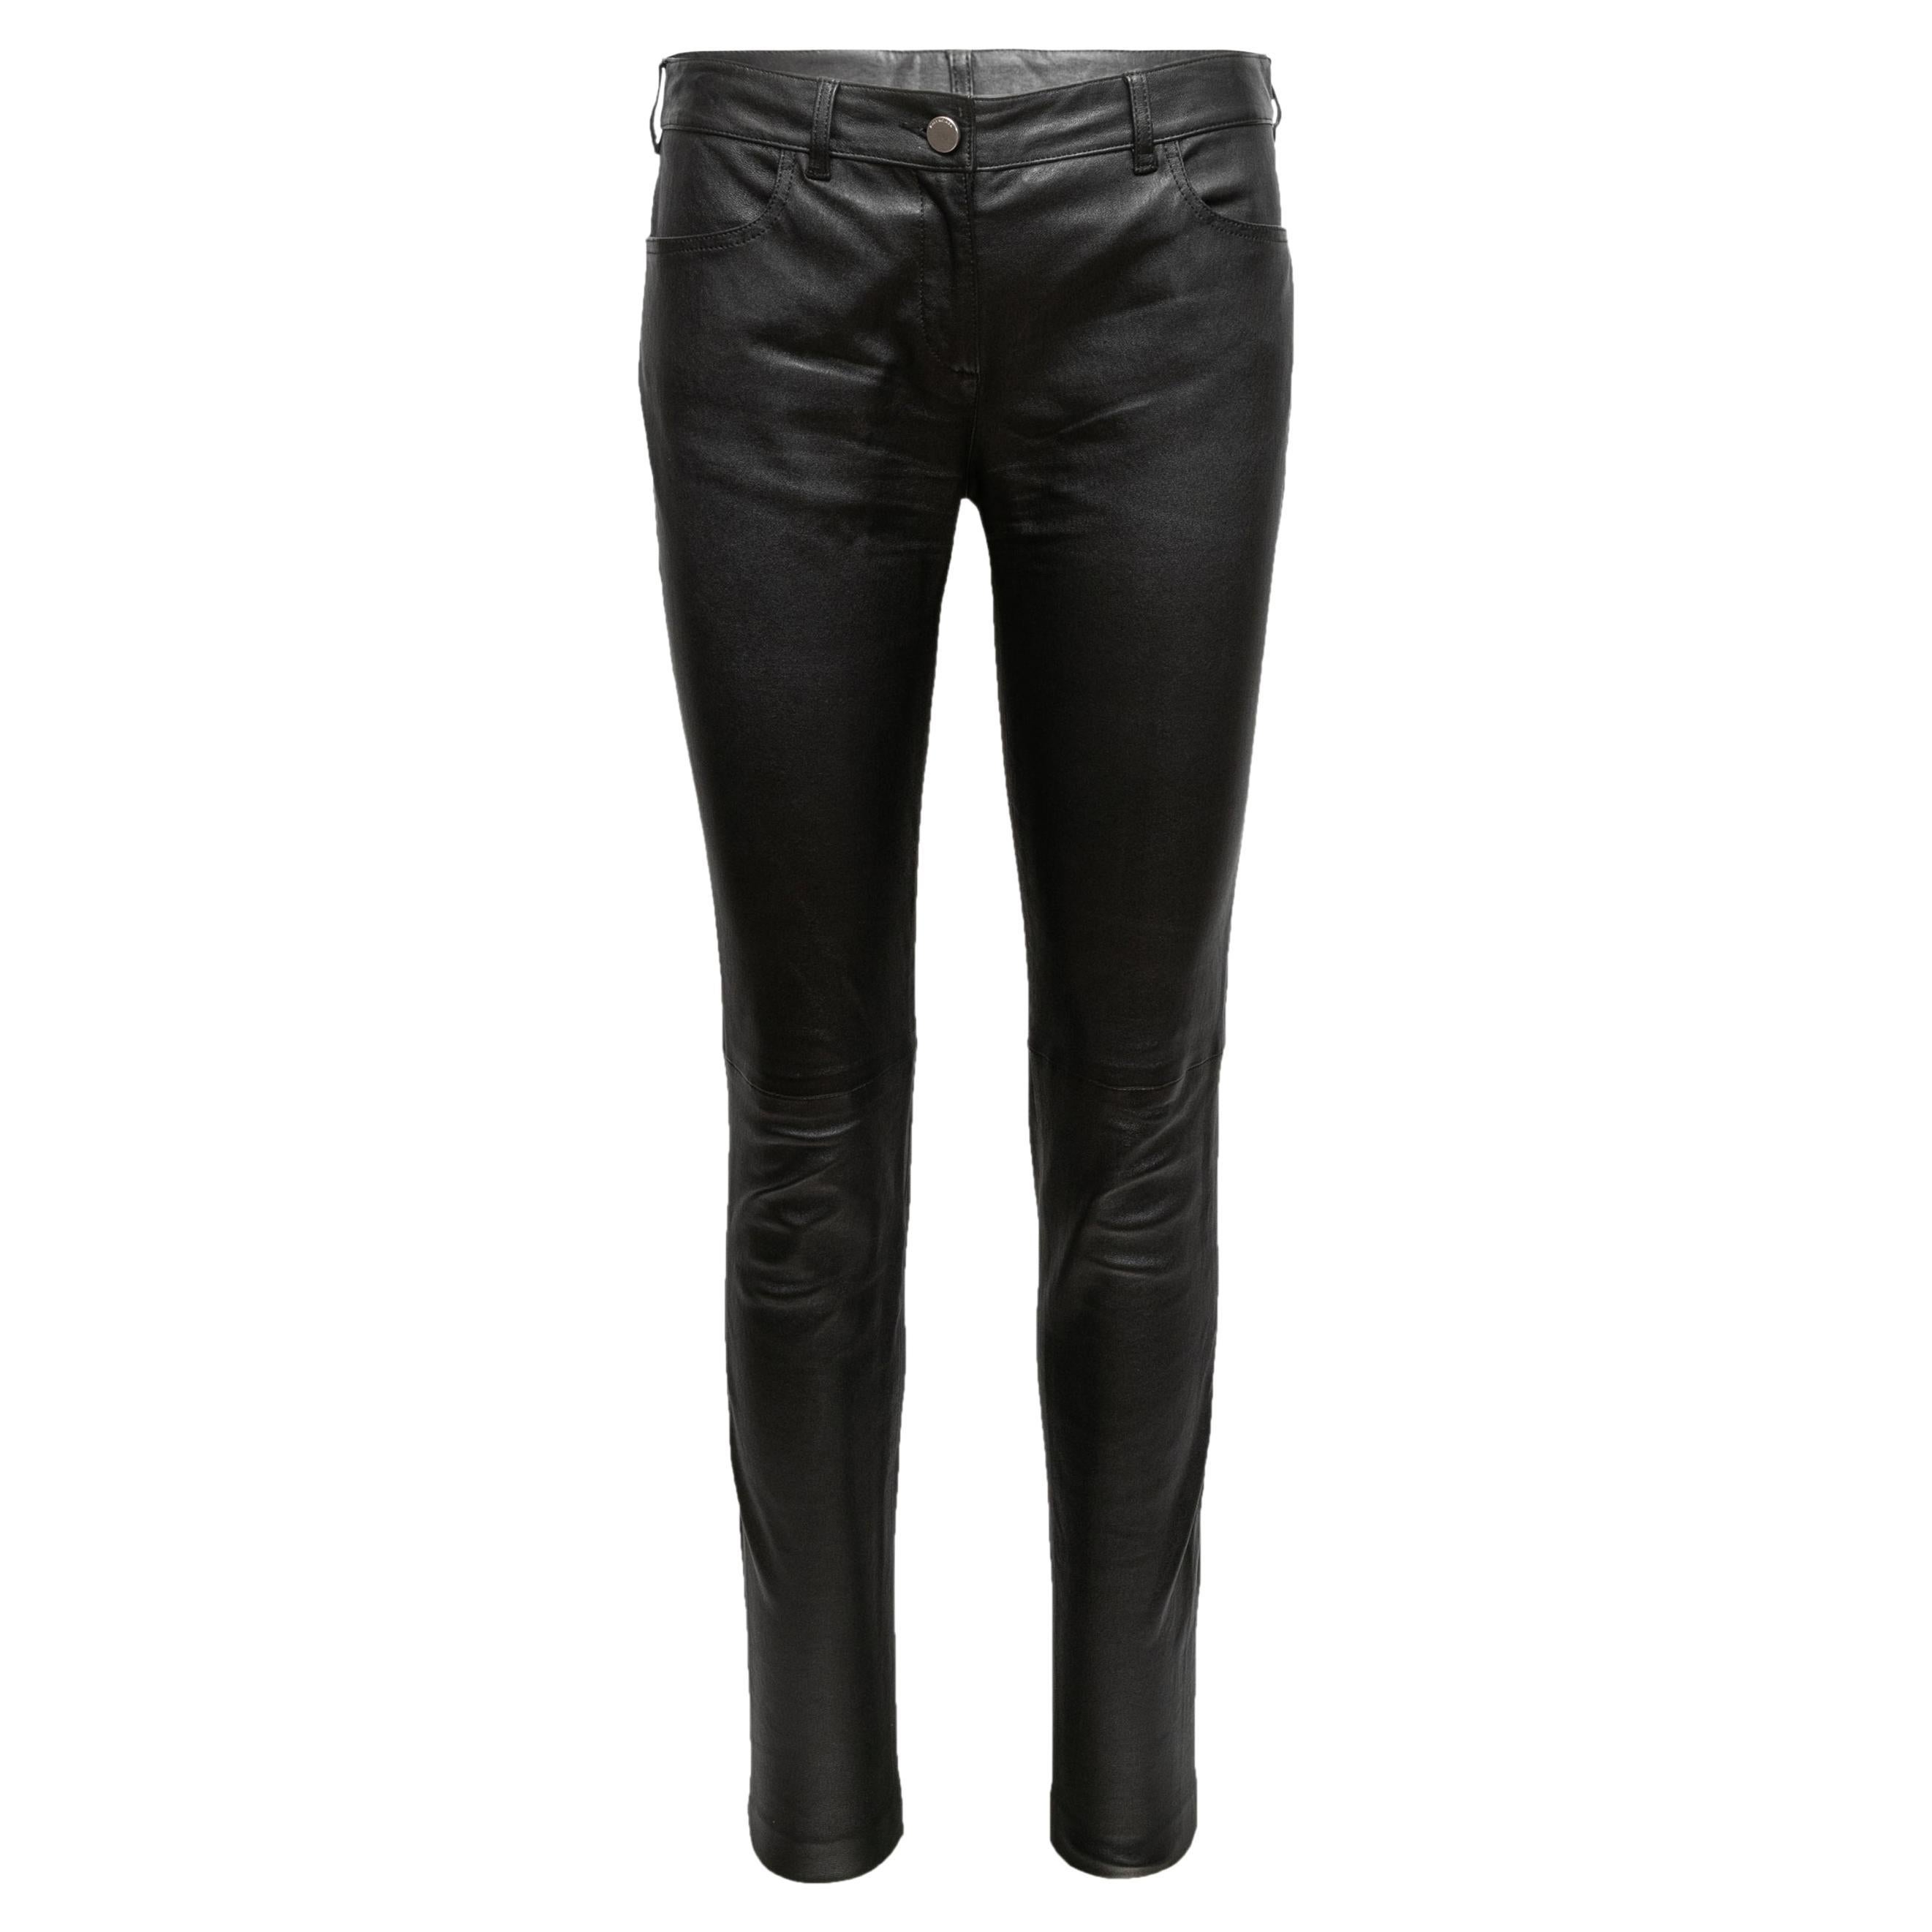 Black Balenciaga Leather Skinny-Leg Pants Size EU 40